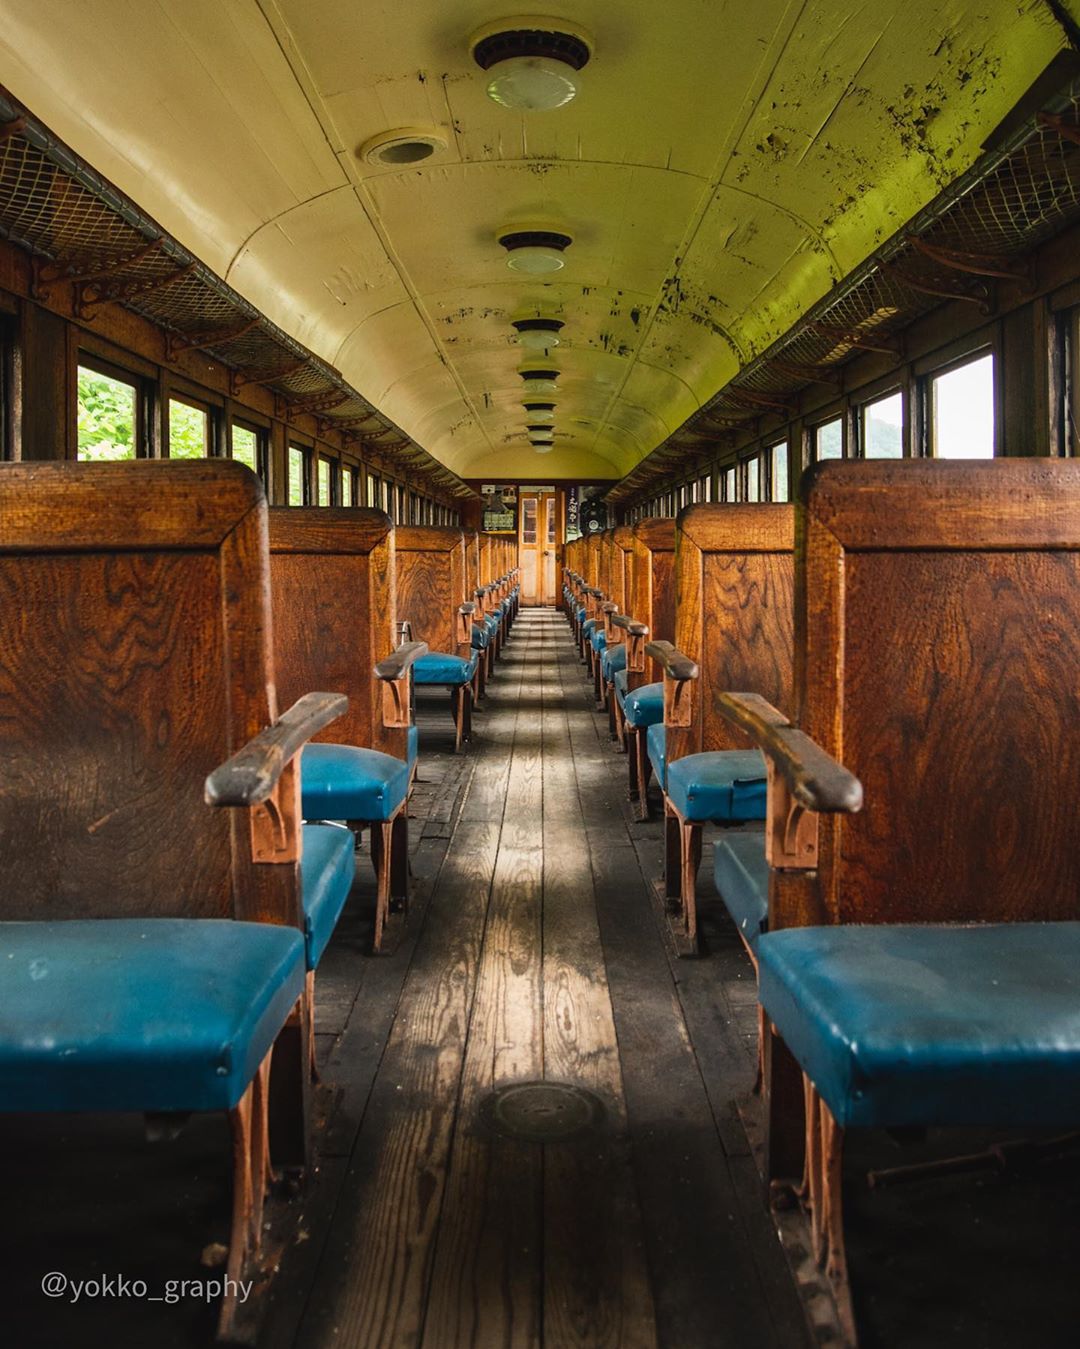 Abandoned train in Yubari